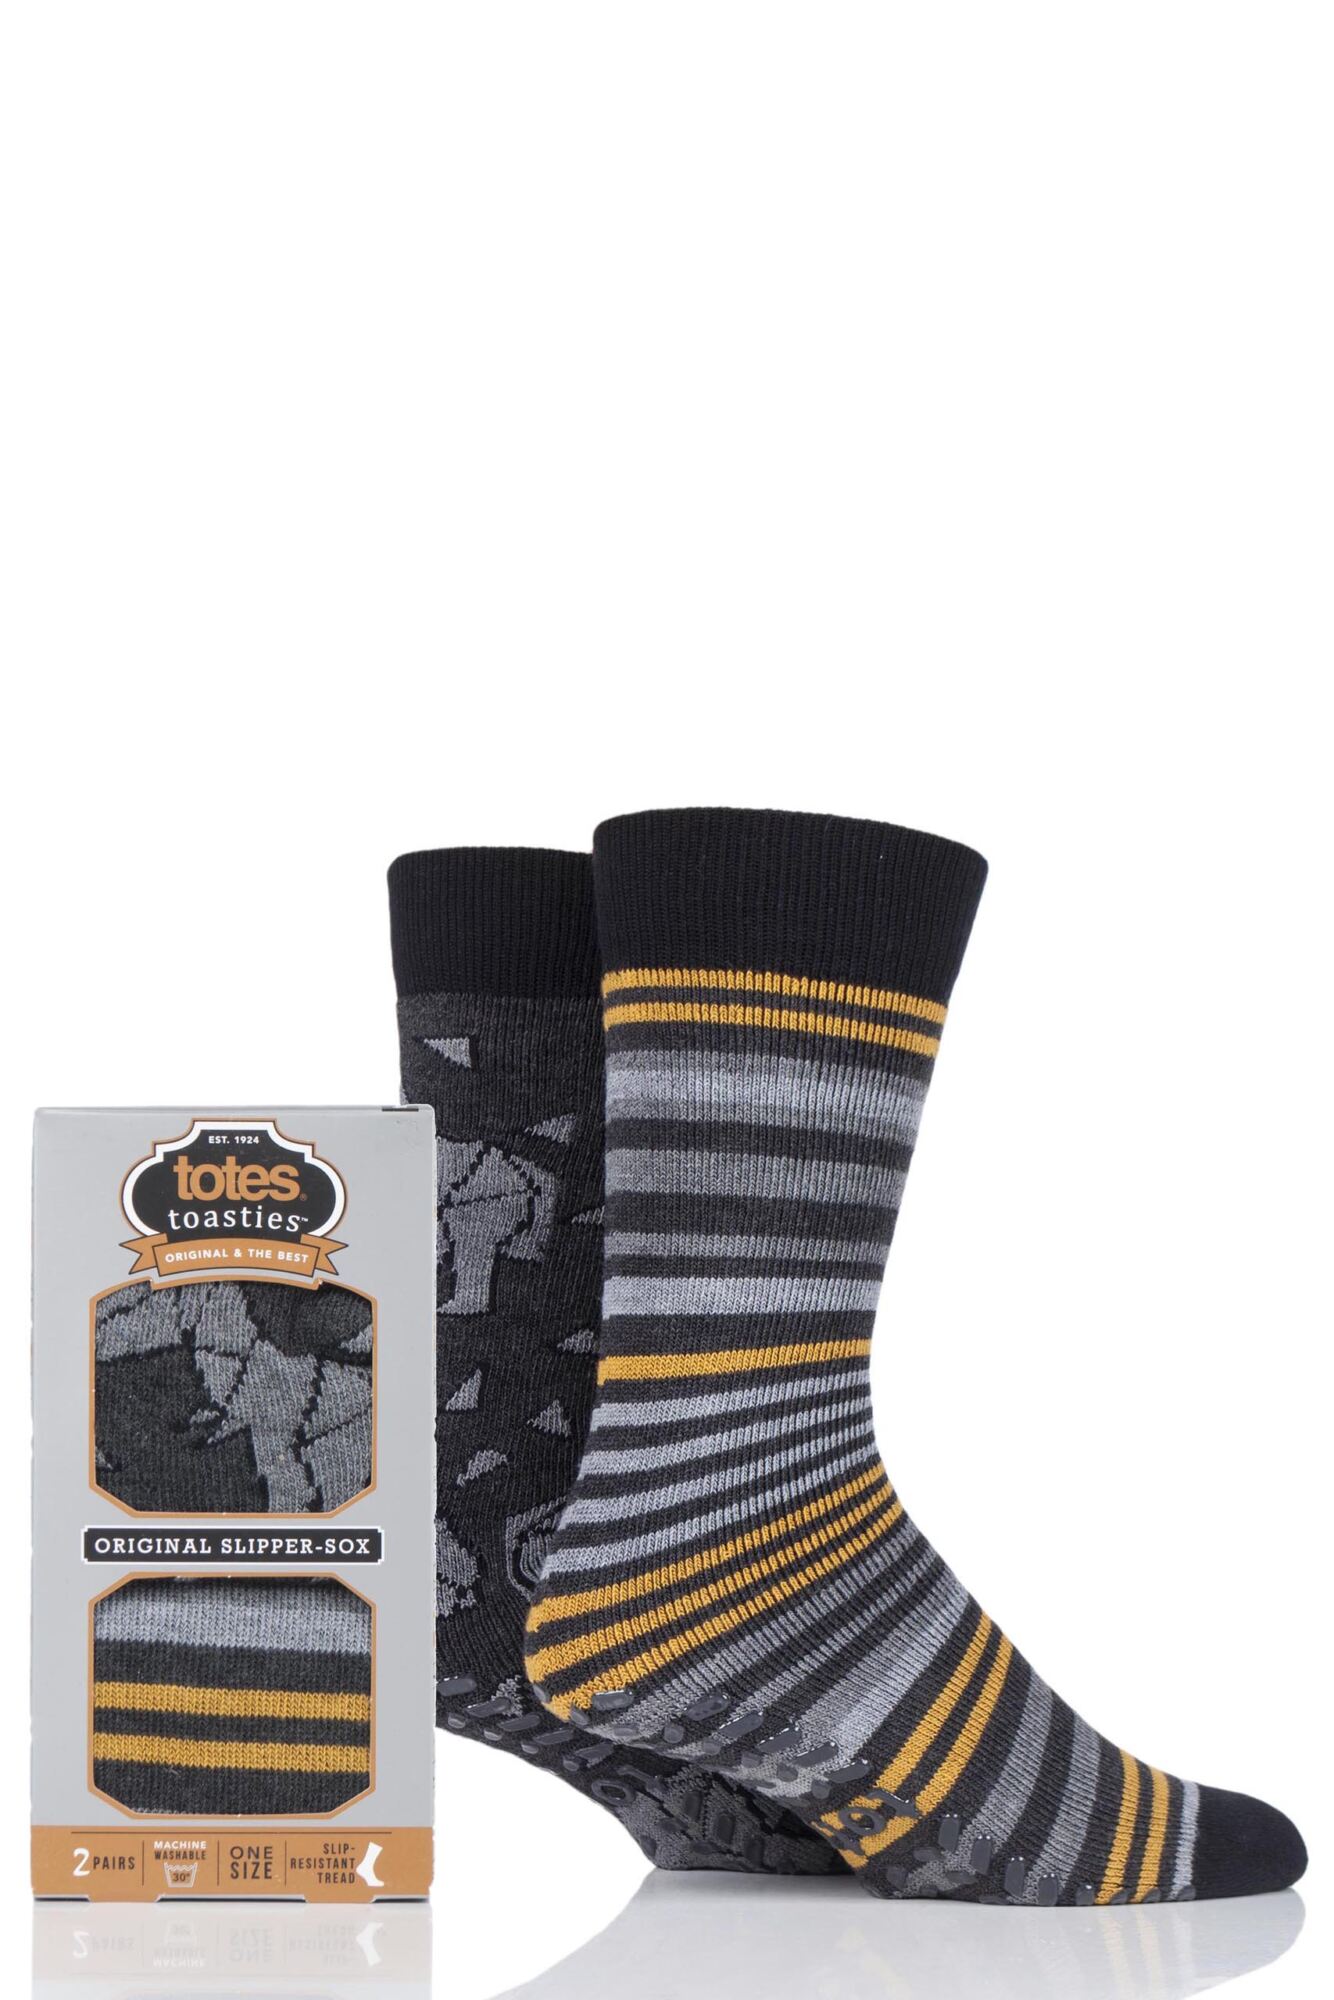 2 Pair Original Plain and Patterned Slipper Socks Men's - Totes